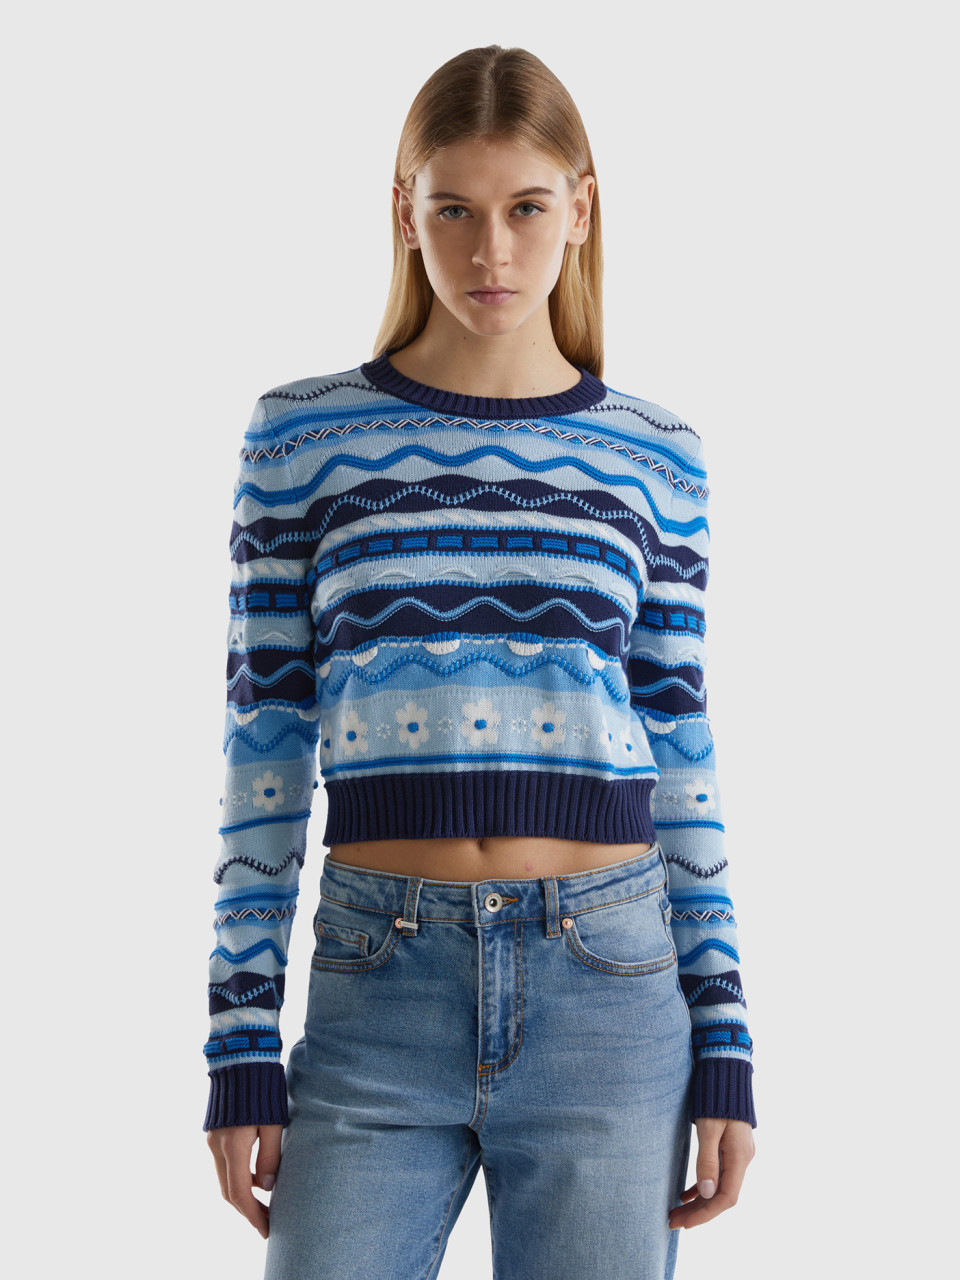 Benetton, Knit 100% Cotton Sweater, Multi-color, Women